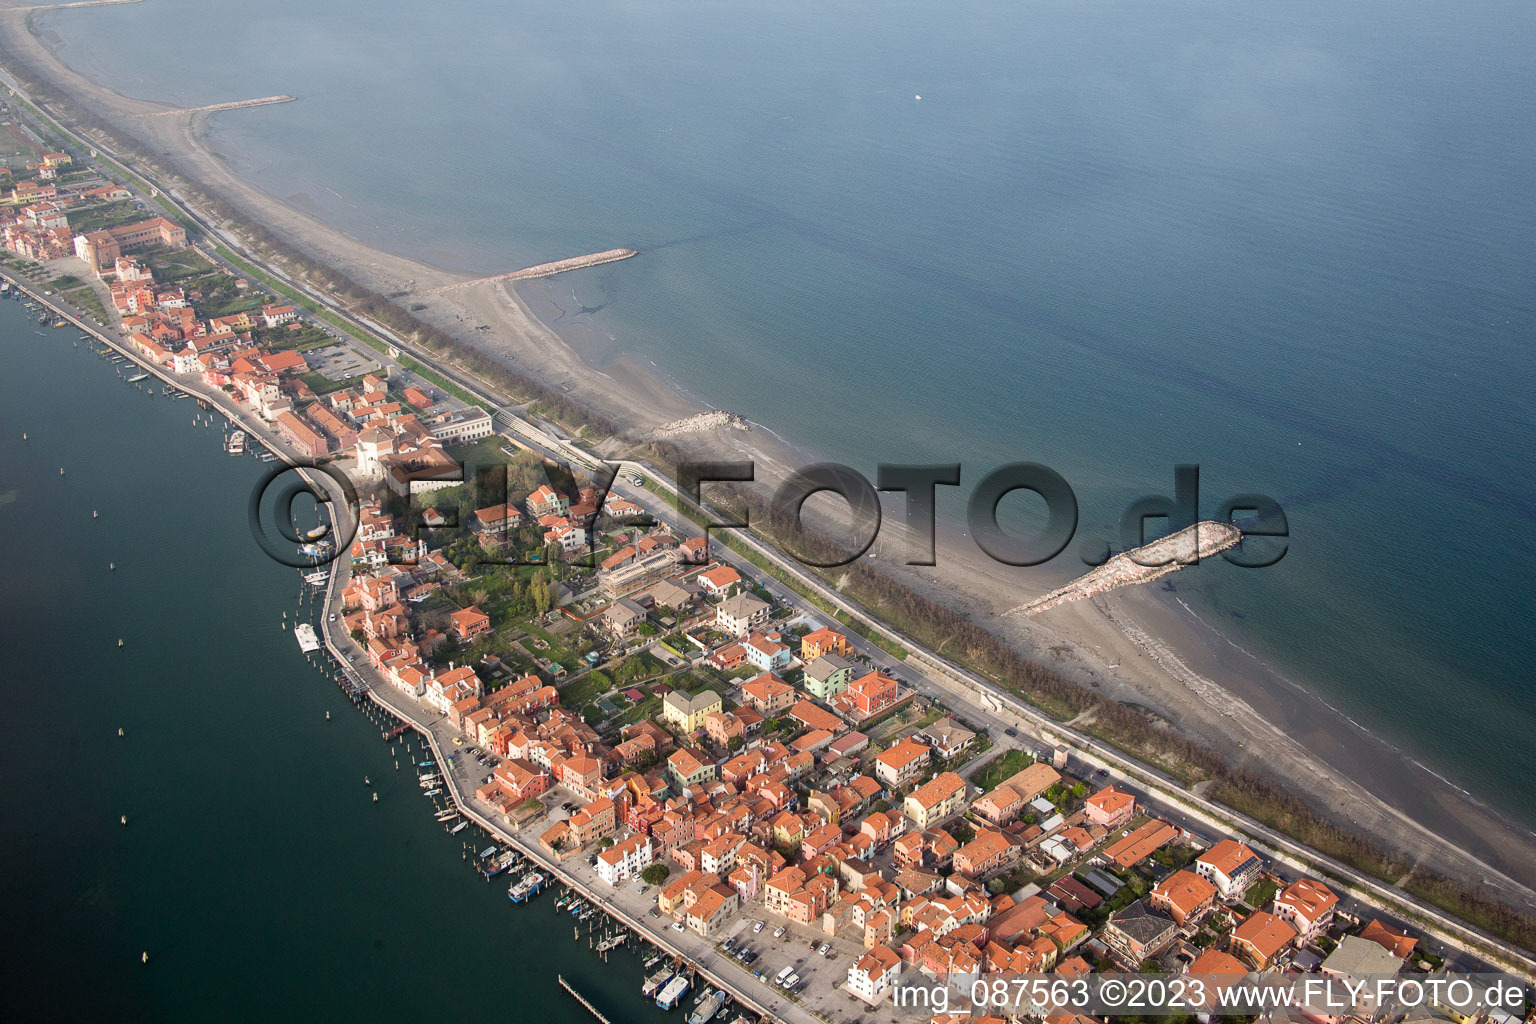 Drone image of Townscape on the seacoast of Mediterranean Sea in San Vito in Veneto, Italy